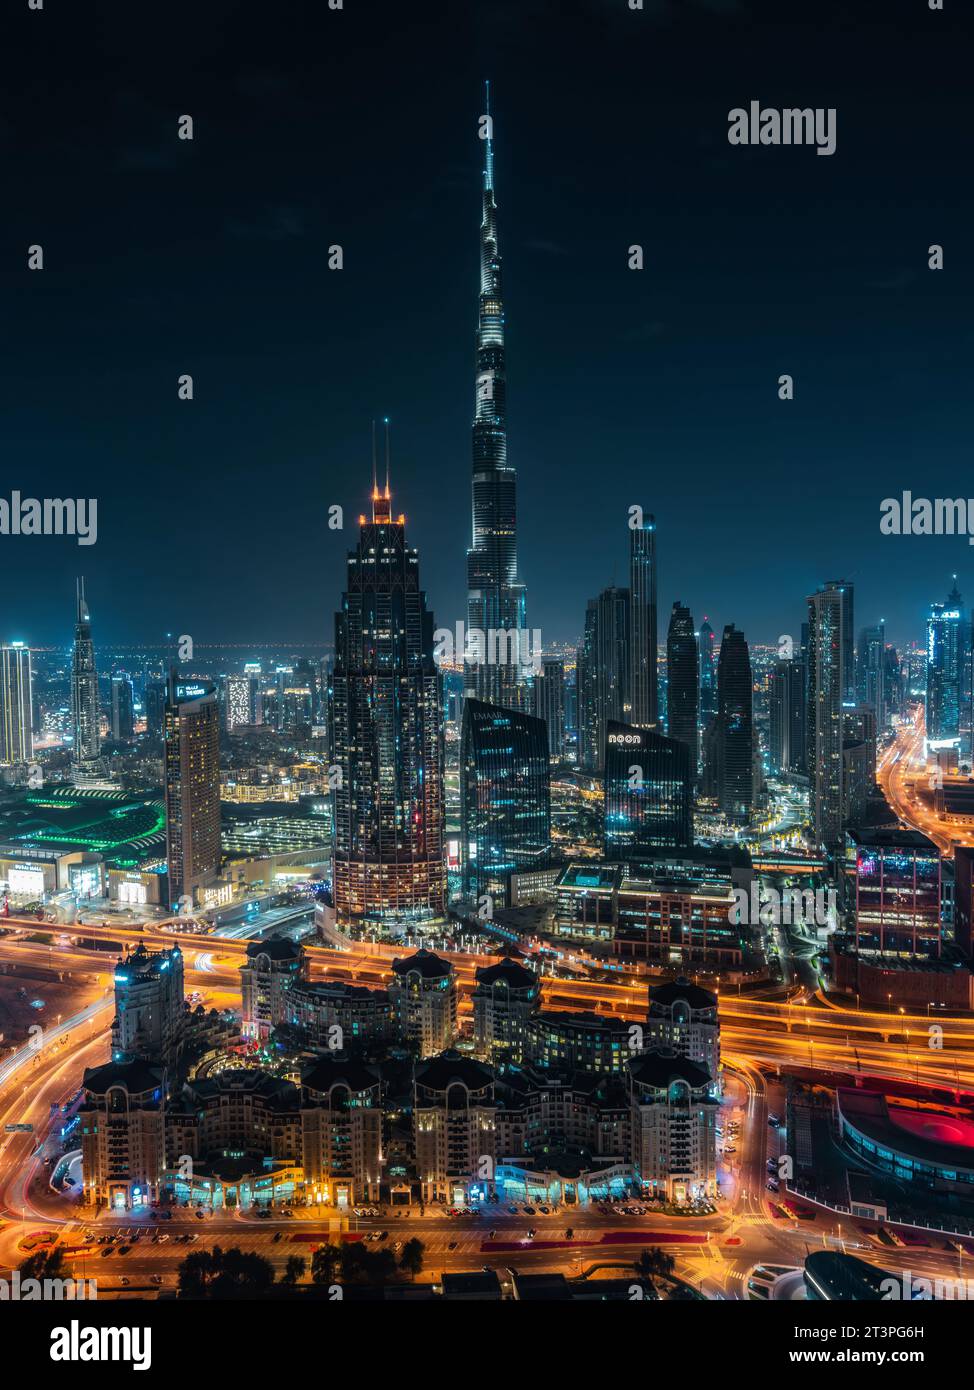 Futuristic Dubai skyline including the iconic Burj Khalifa building illuminated at night in Dubai, United Arab Emirates (UAE). Stock Photo